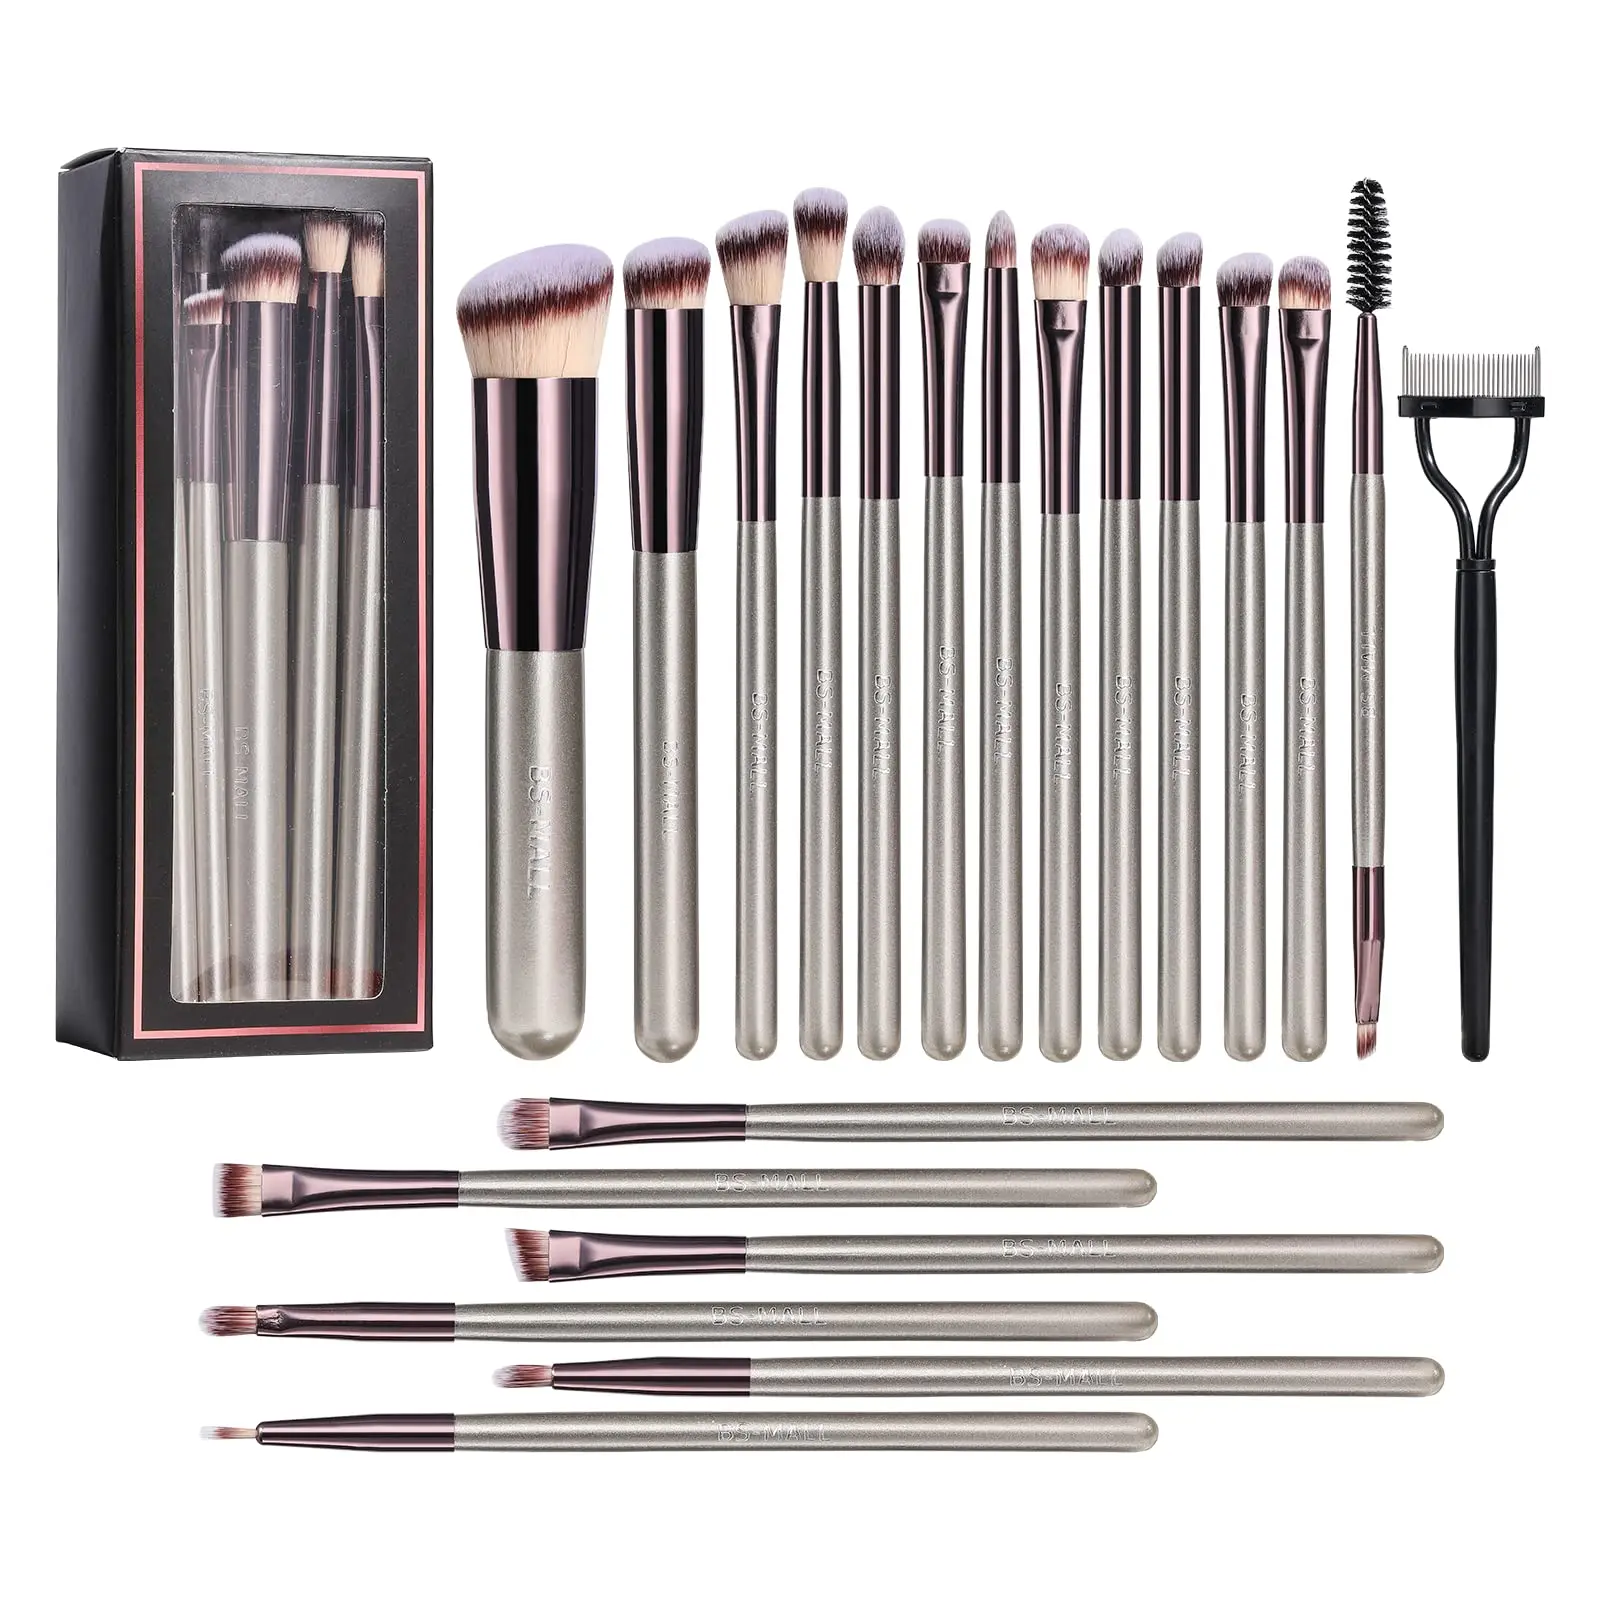 

Professional Beautytools Set Premium Synthetic Powder Foundation Blending Eye Shadow Blush Concealer Face Makeup Brush Kit